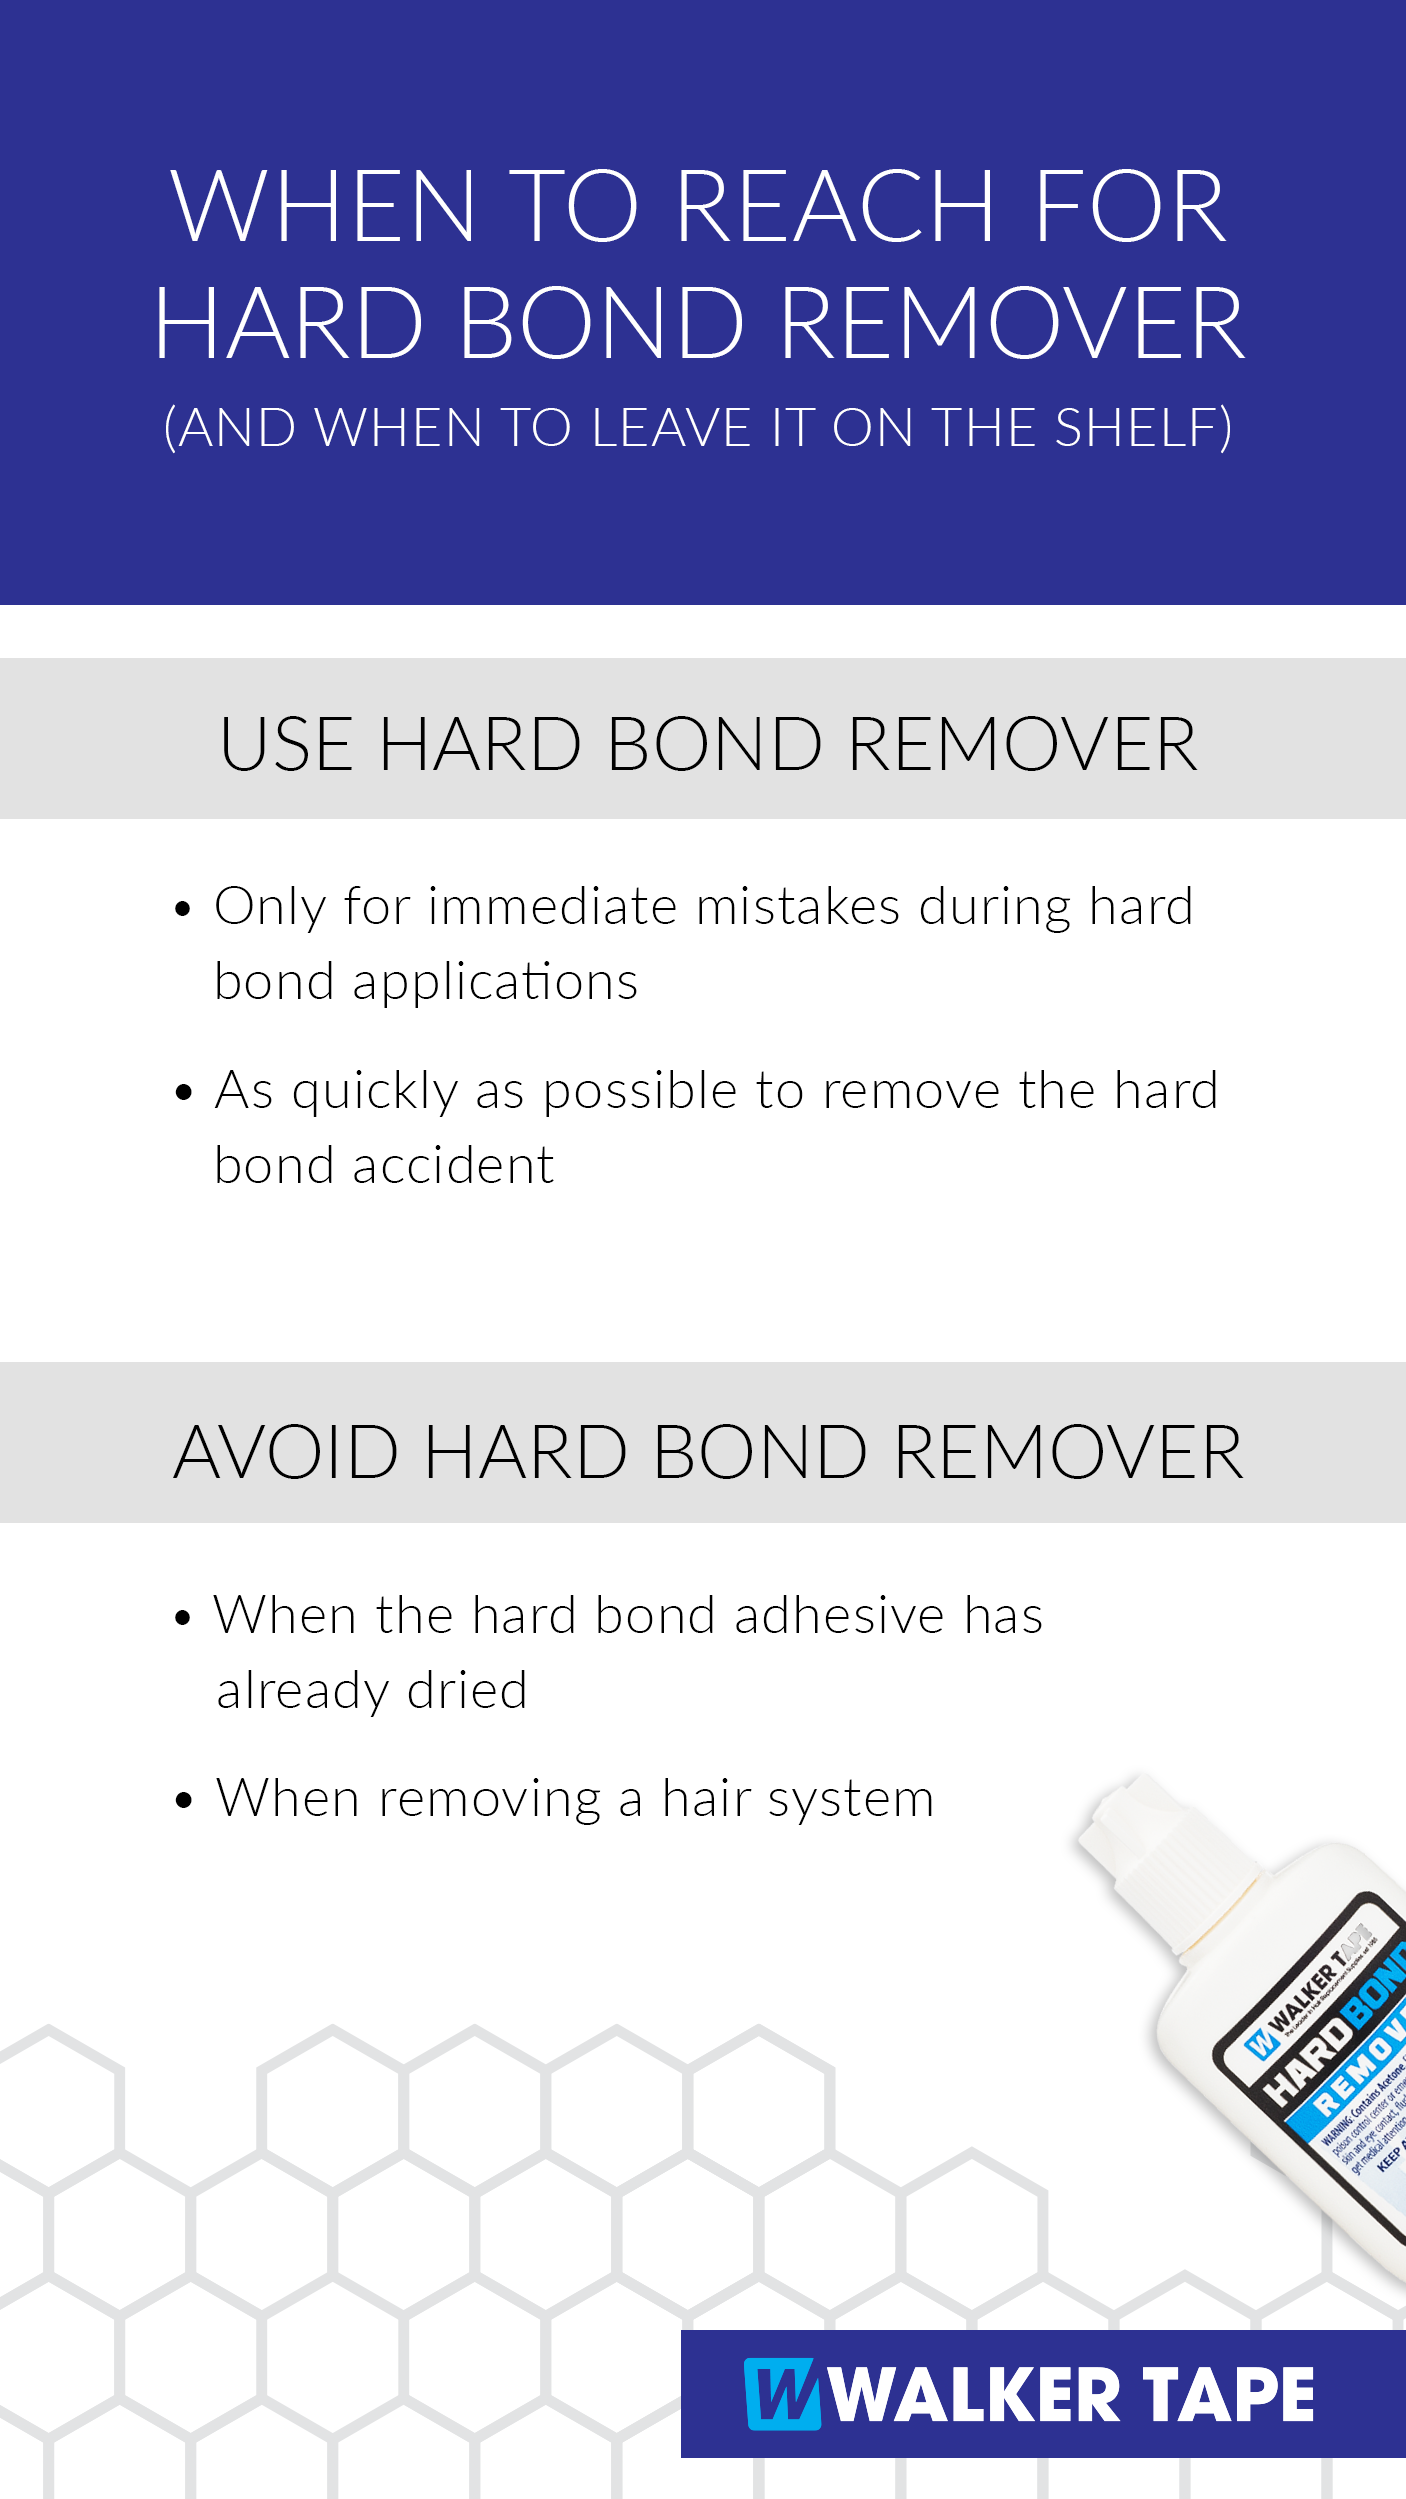 Hard Bond Remover Infographic